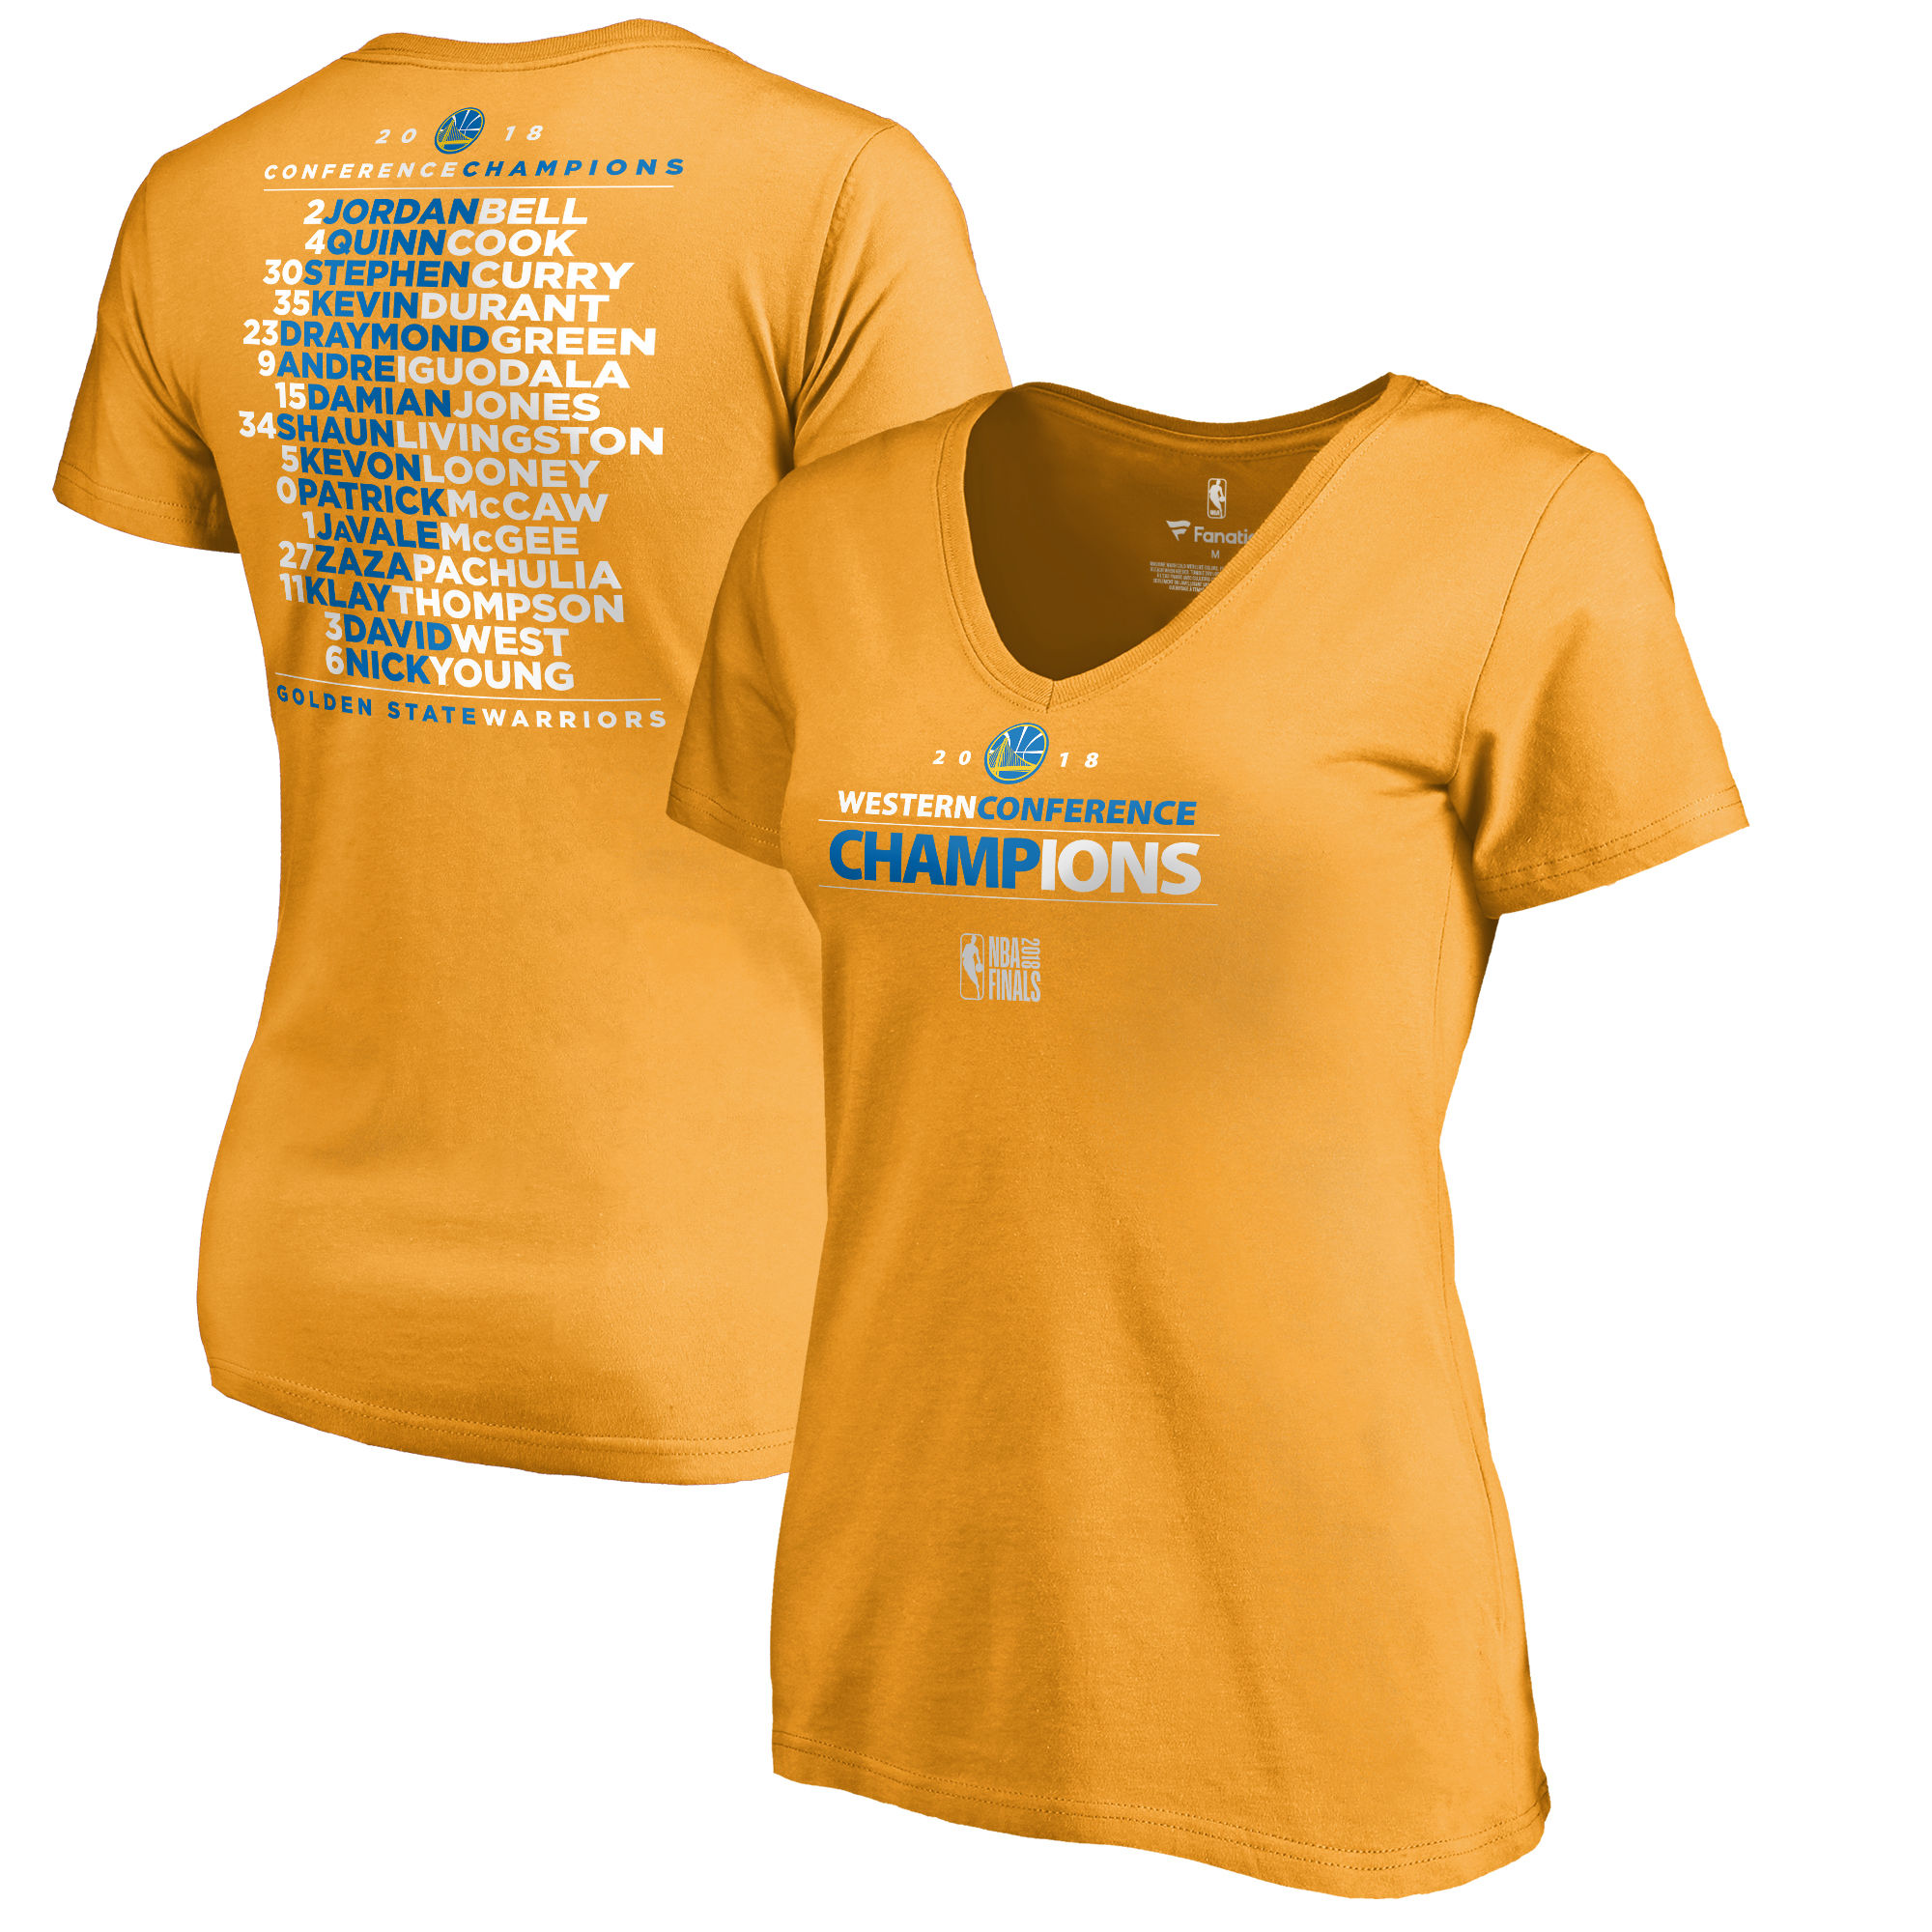 Golden State Warriors Fanatics Branded Women's 2018 Western Conference Champions Backcourt Blacktop T-Shirt Gold